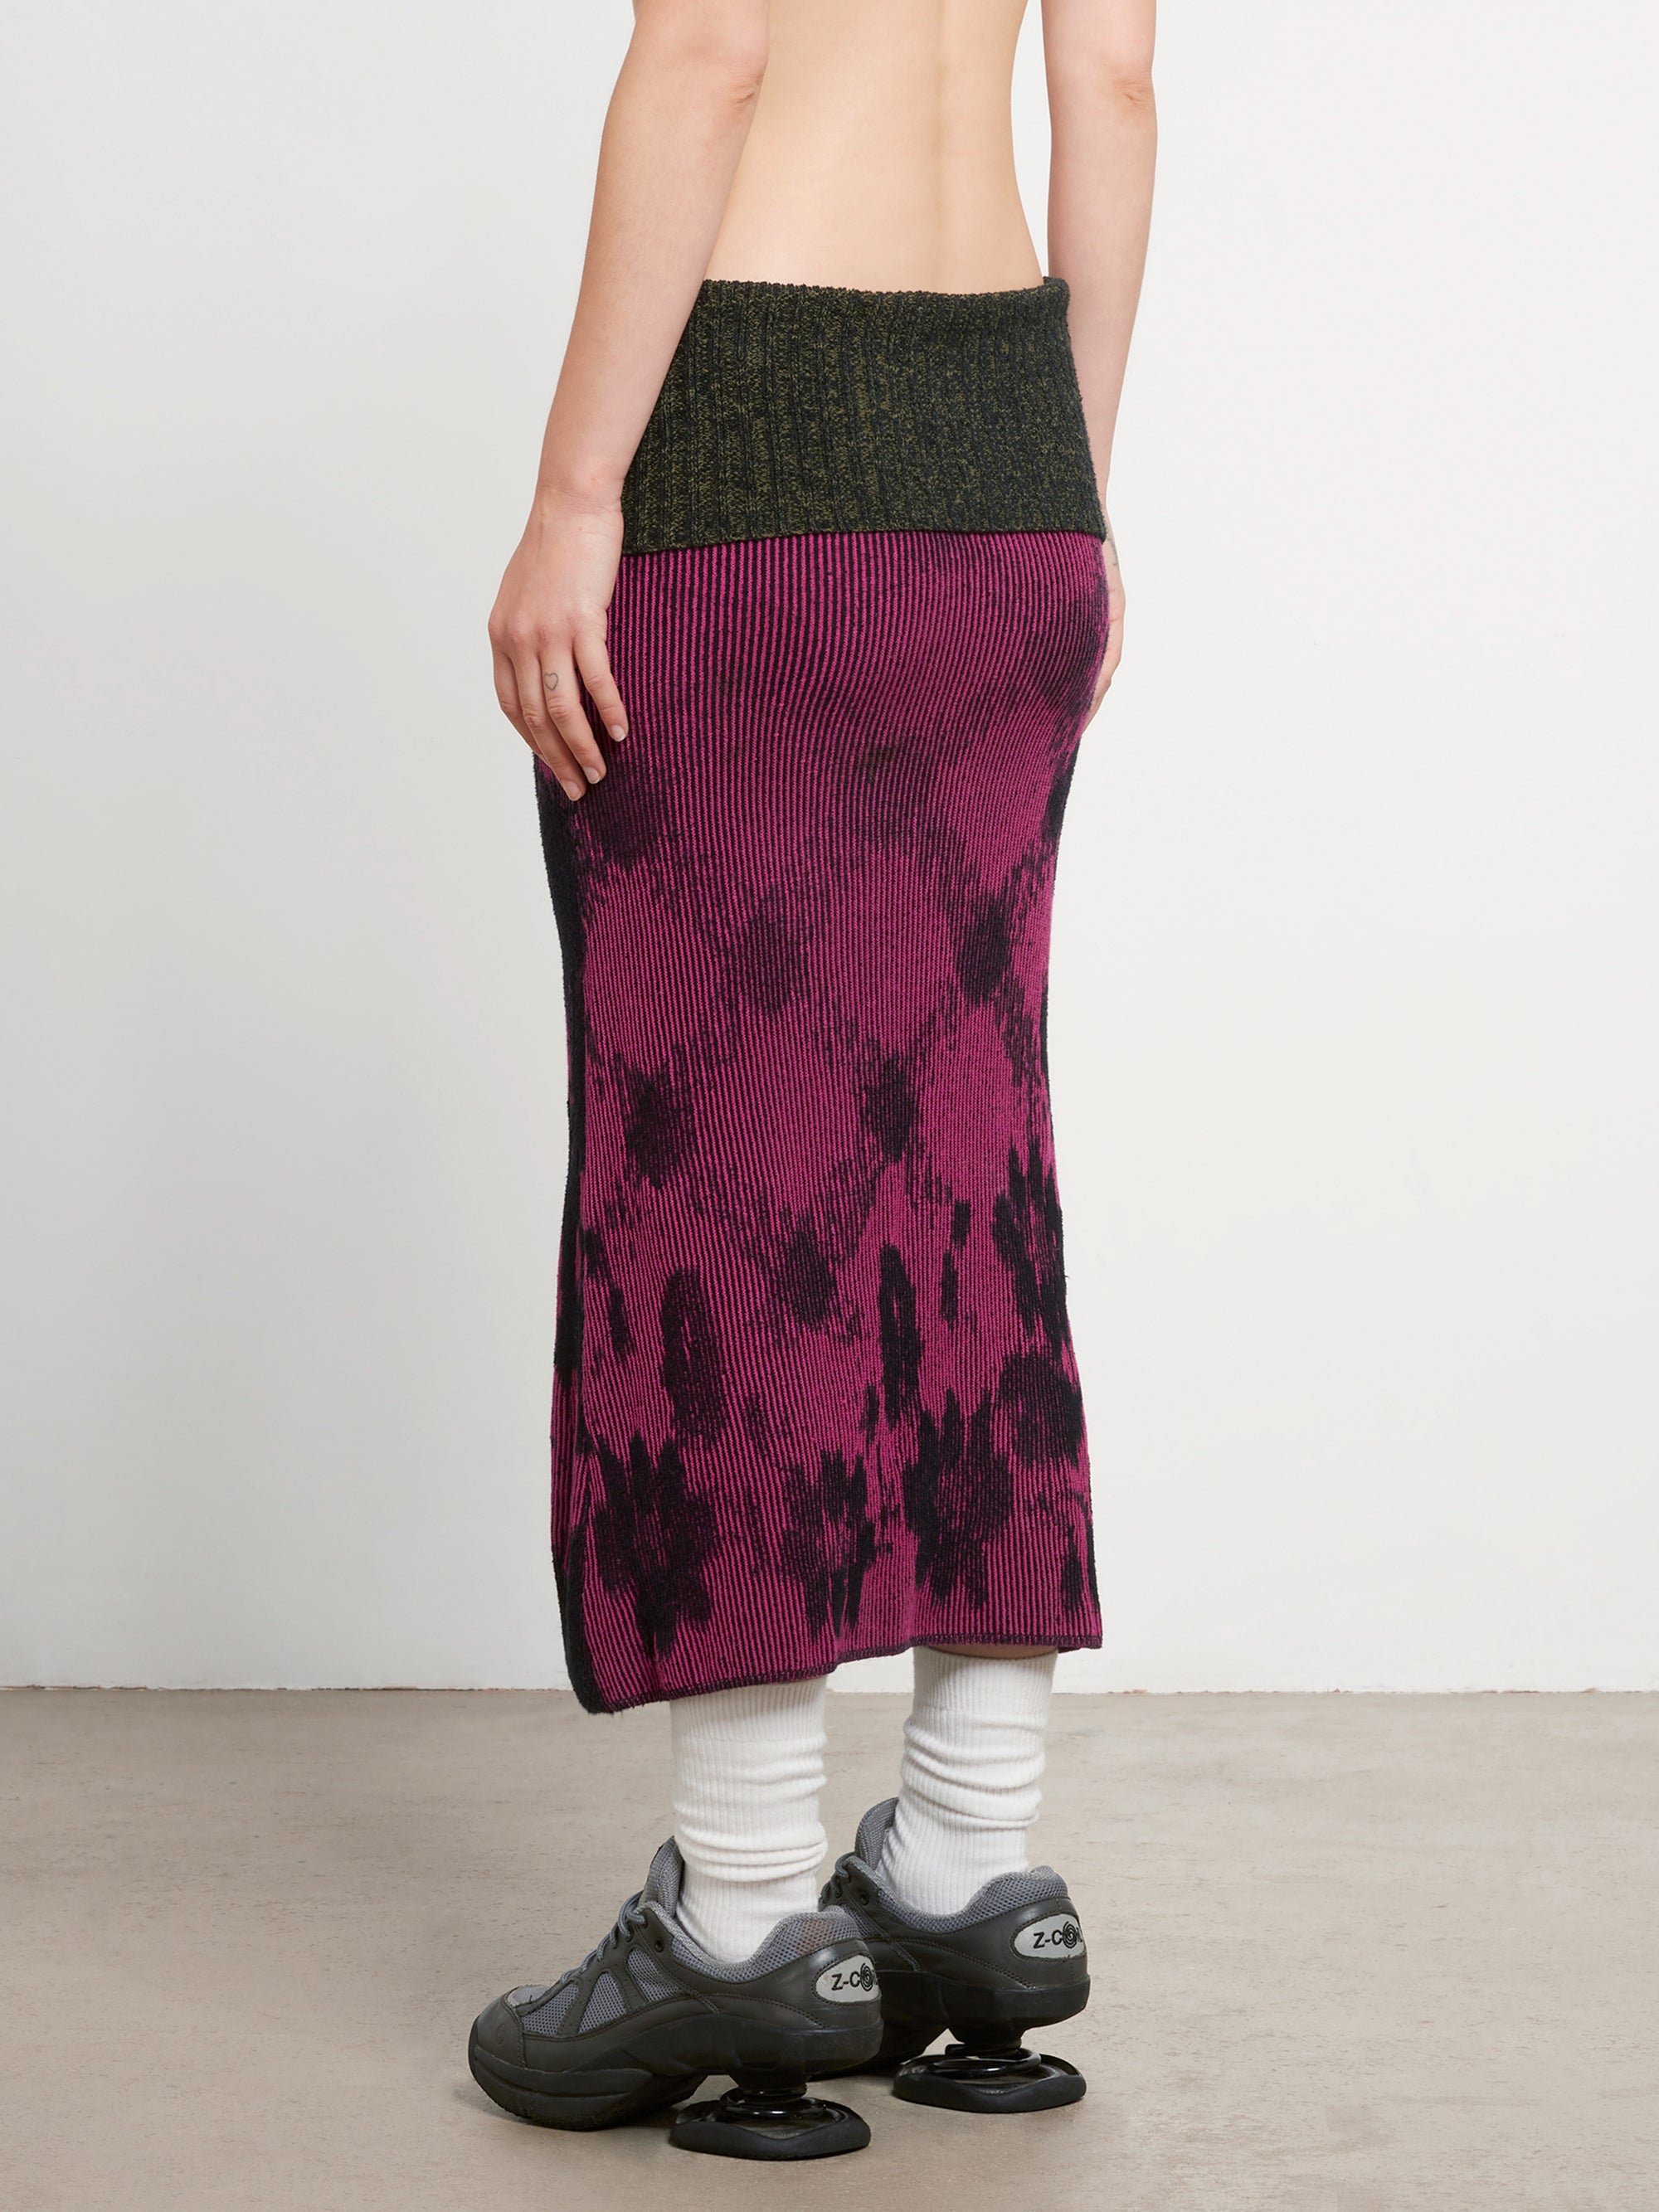 Paolina Russo - Women’s Illusion Knit Maxi Skirt - (Magenta/Black) view 4